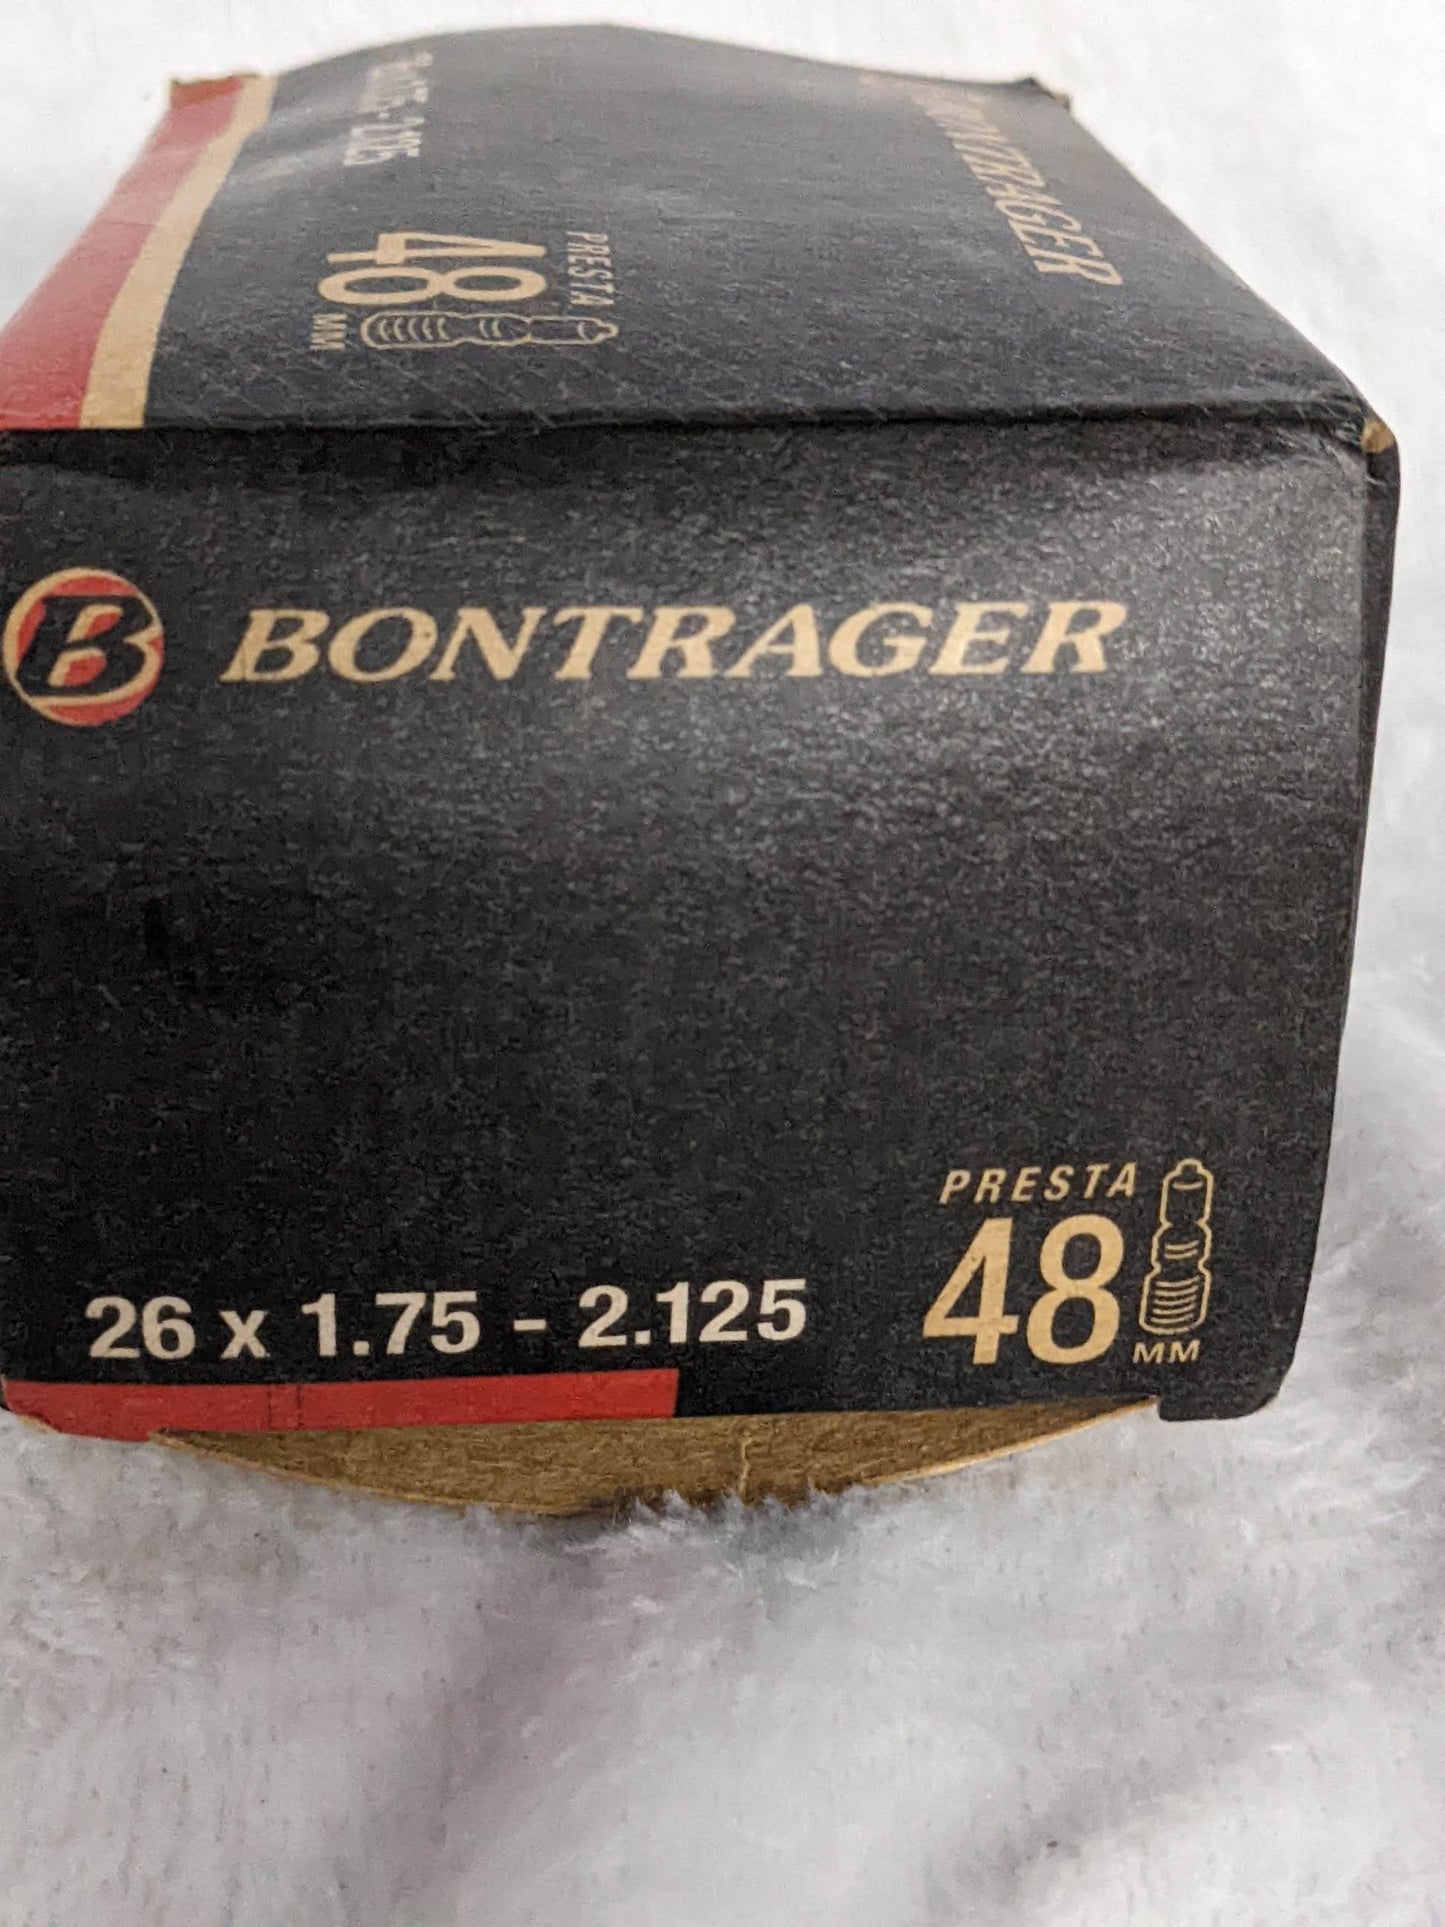 Bontrager Presta Bike Inner Tube Size 26 x 1.75 -2.215 Color Black Condition New